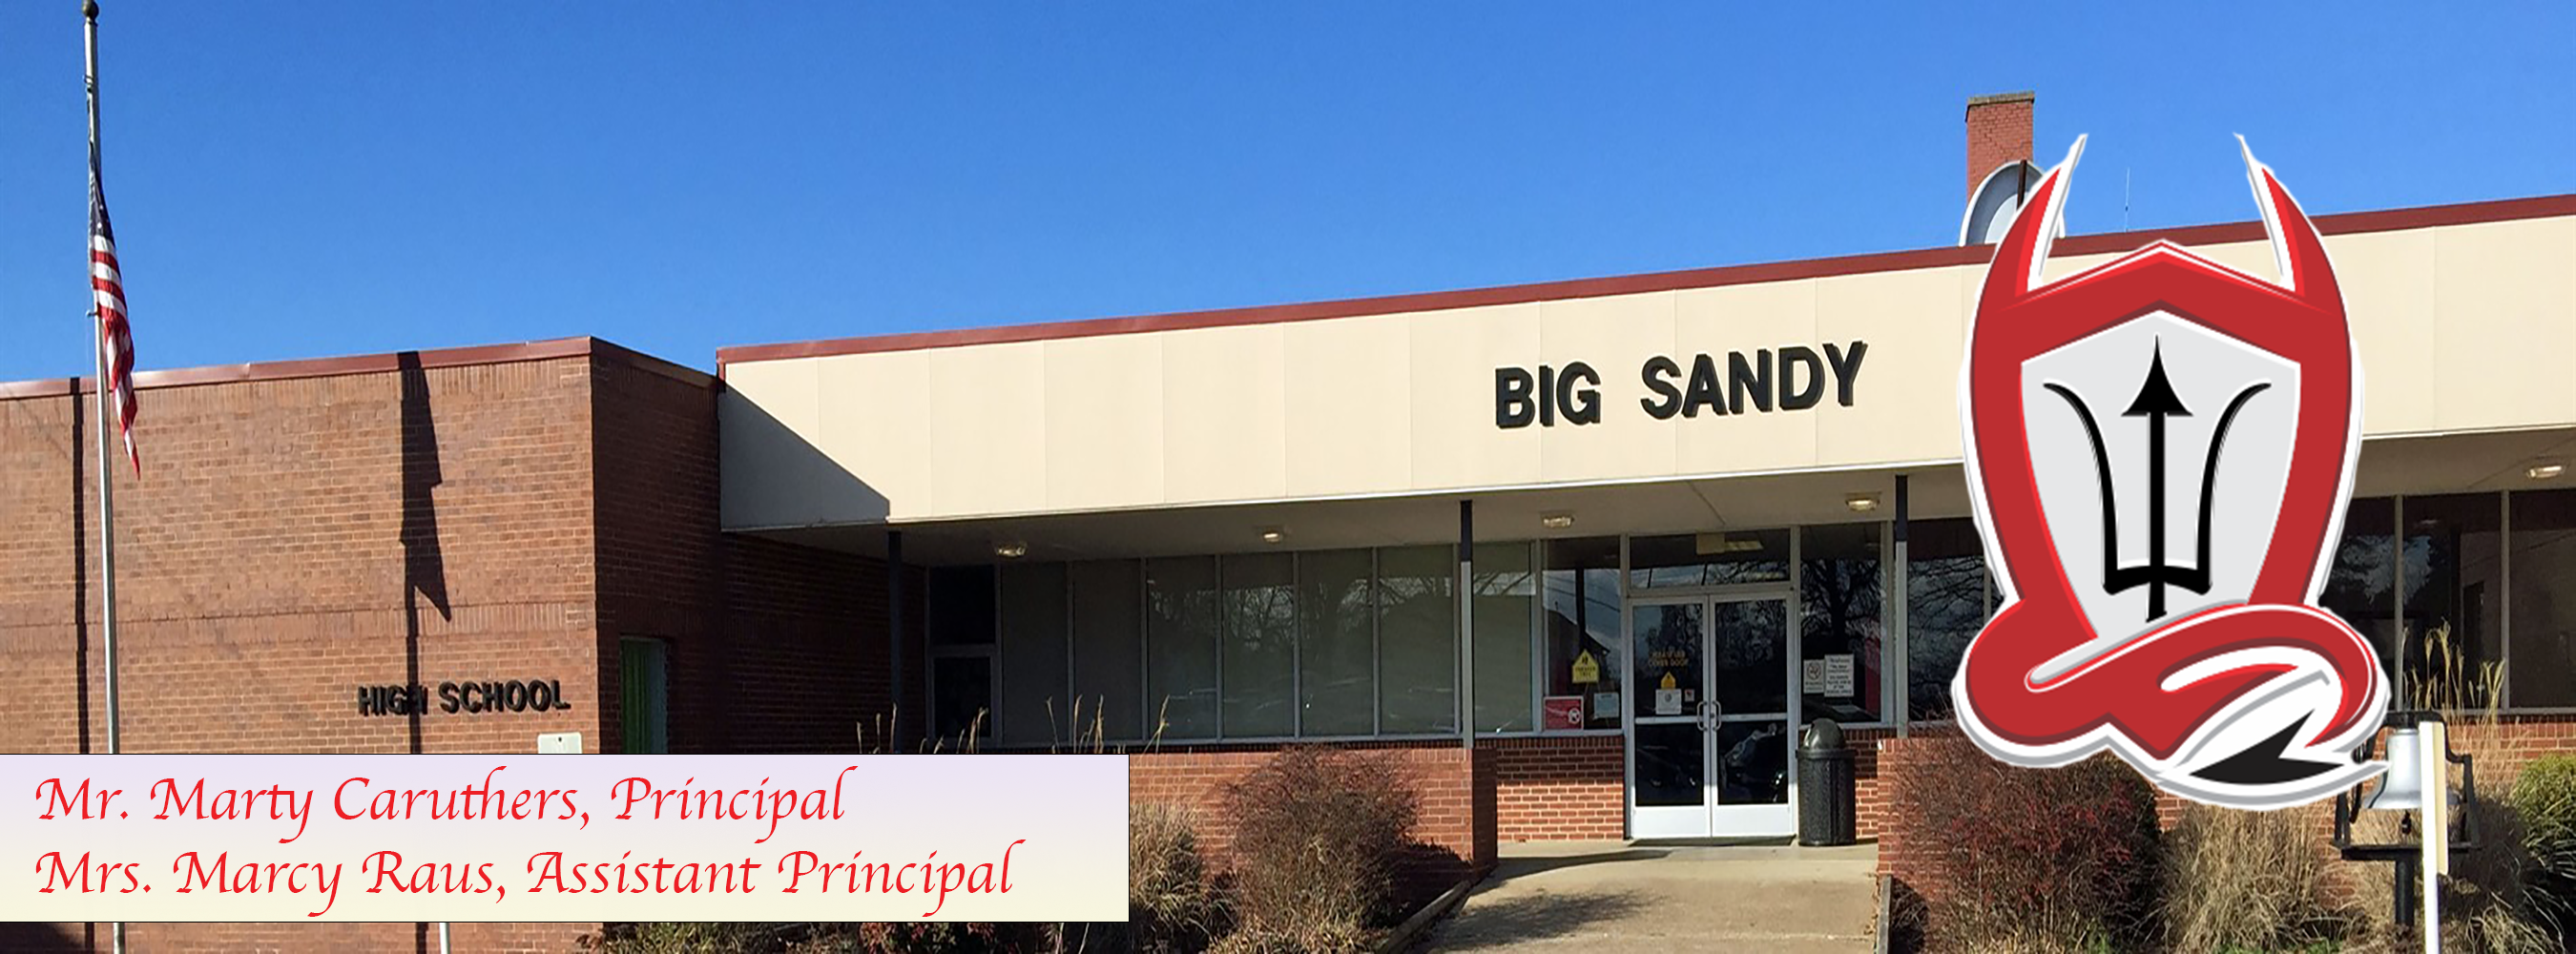 Big Sandy School